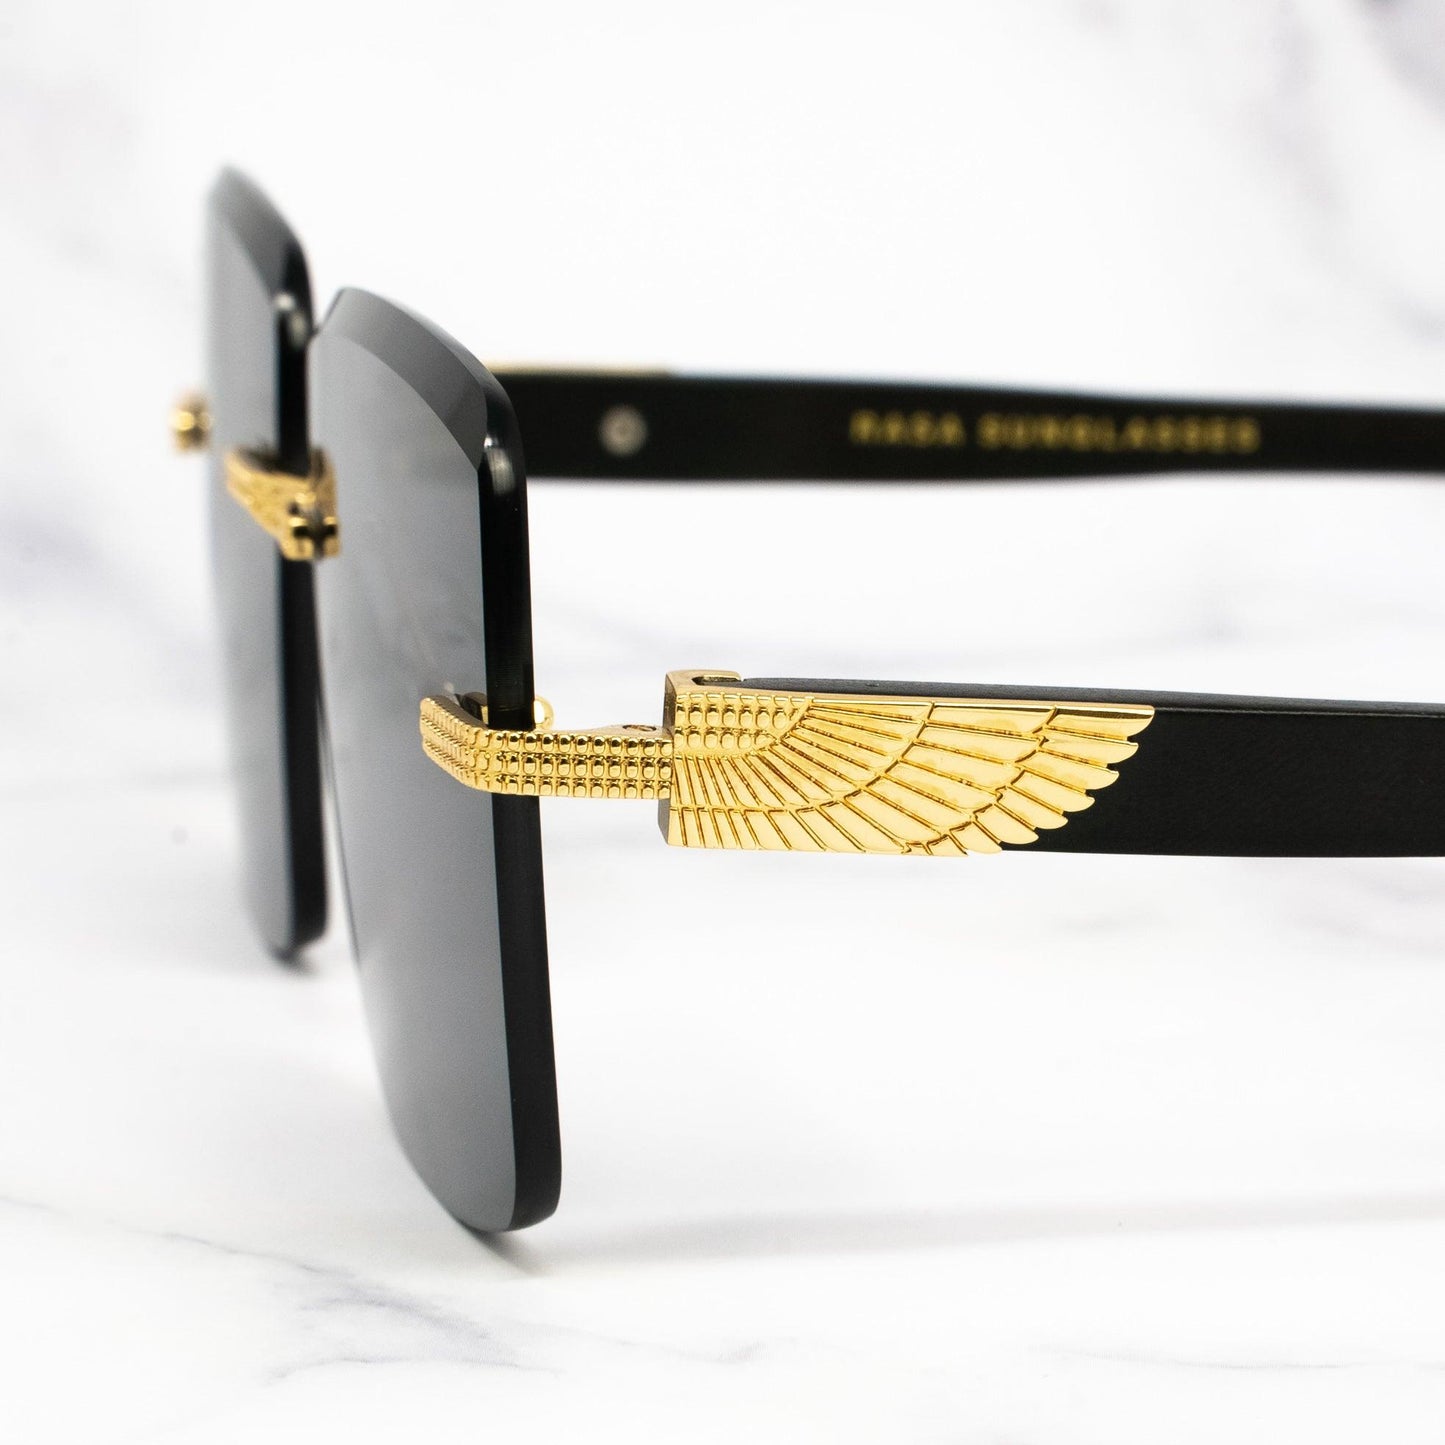 THE MOTOWN - BLACK GOLD - Rasa Sunglasses